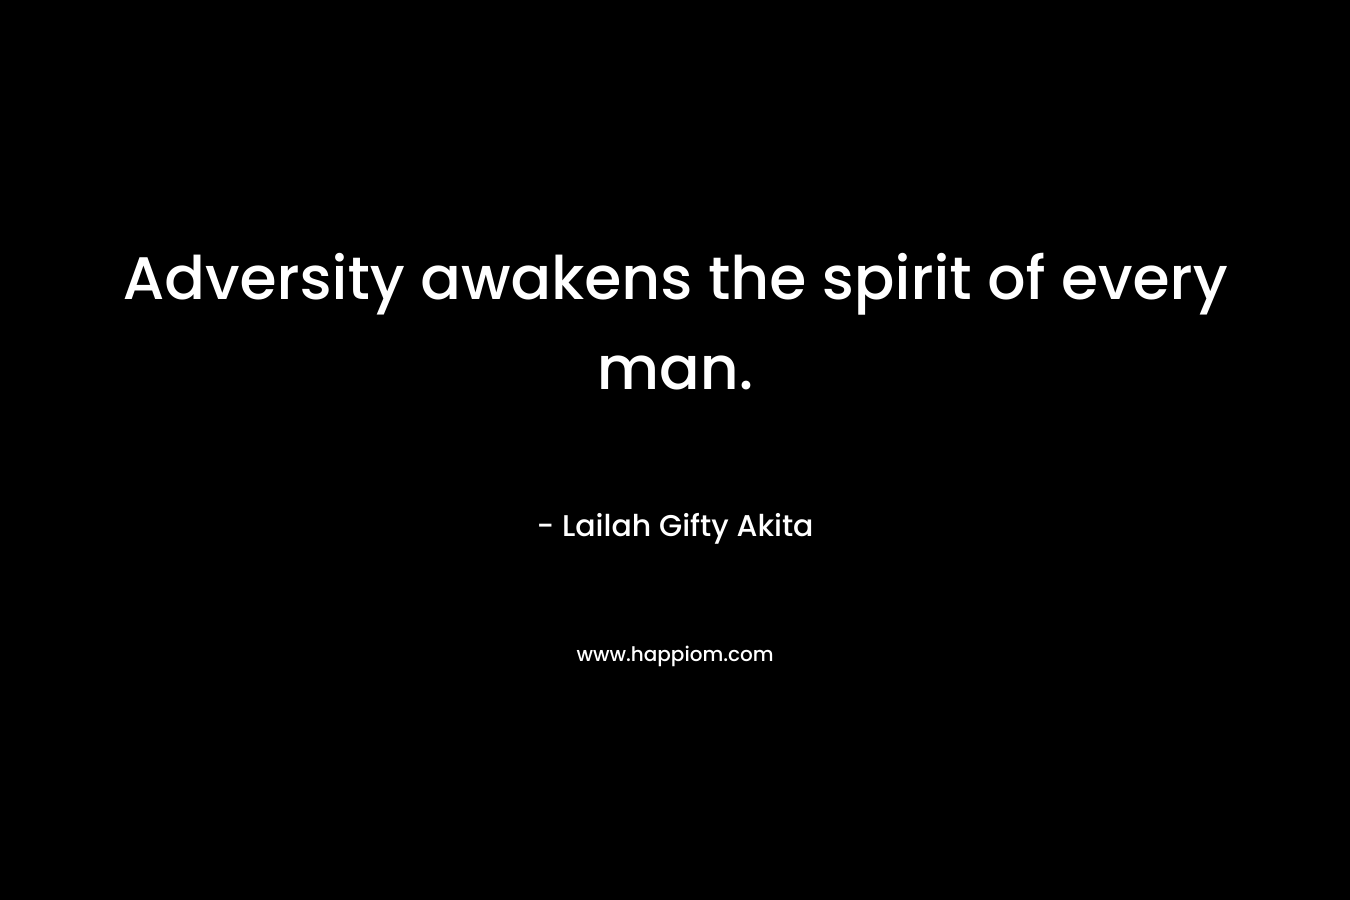 Adversity awakens the spirit of every man.